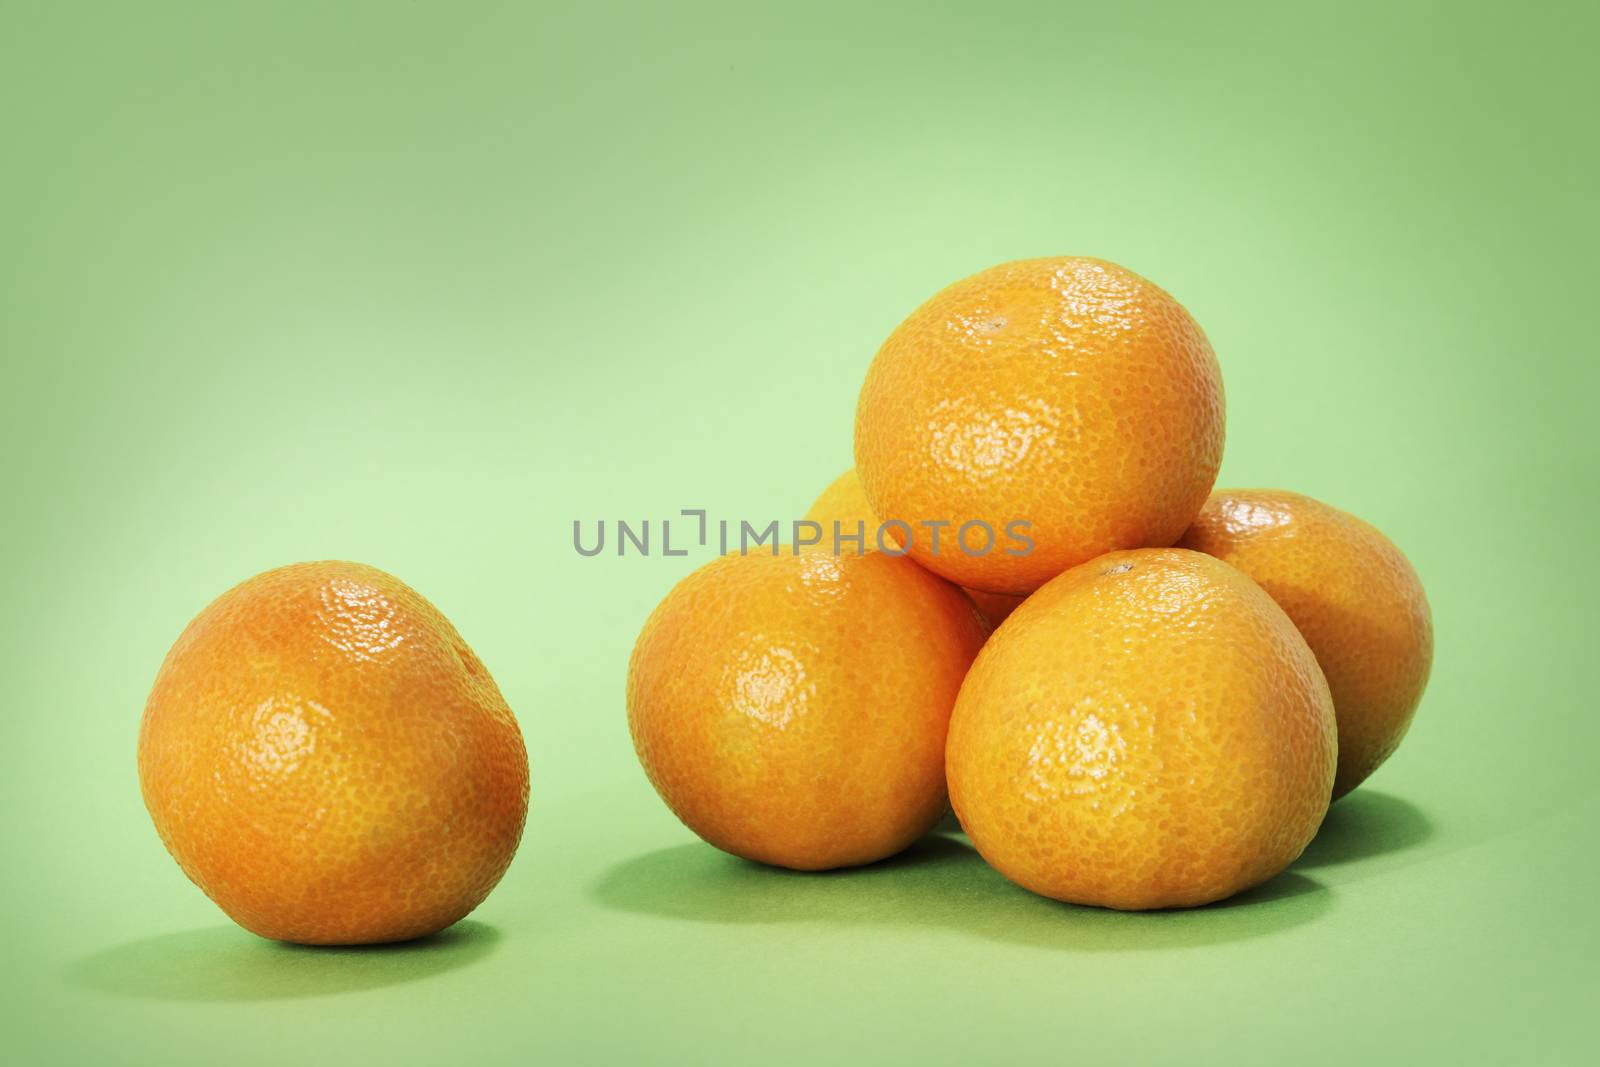 RIpe mandarin oranges on green background.